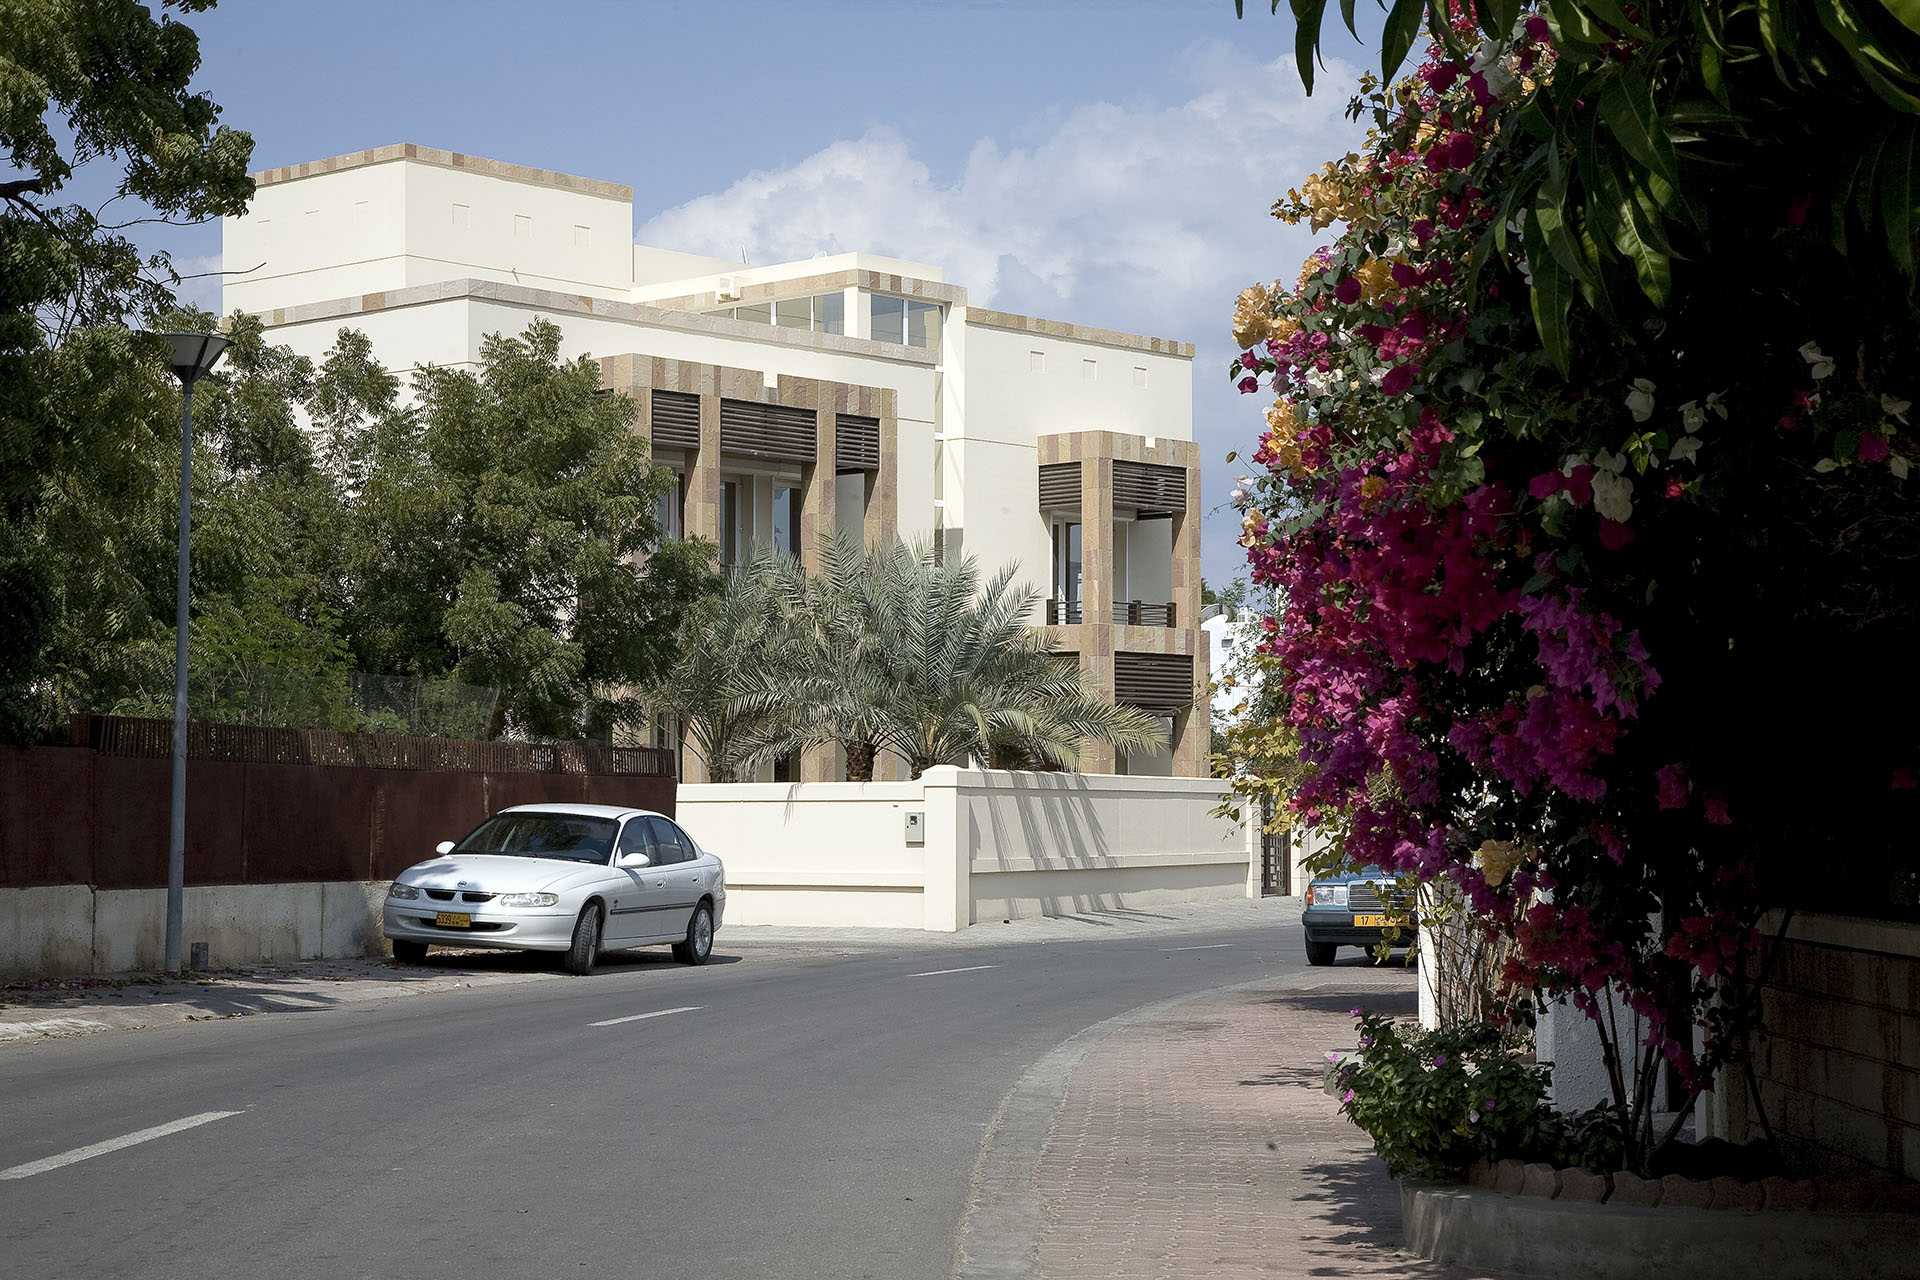 Omani Villa